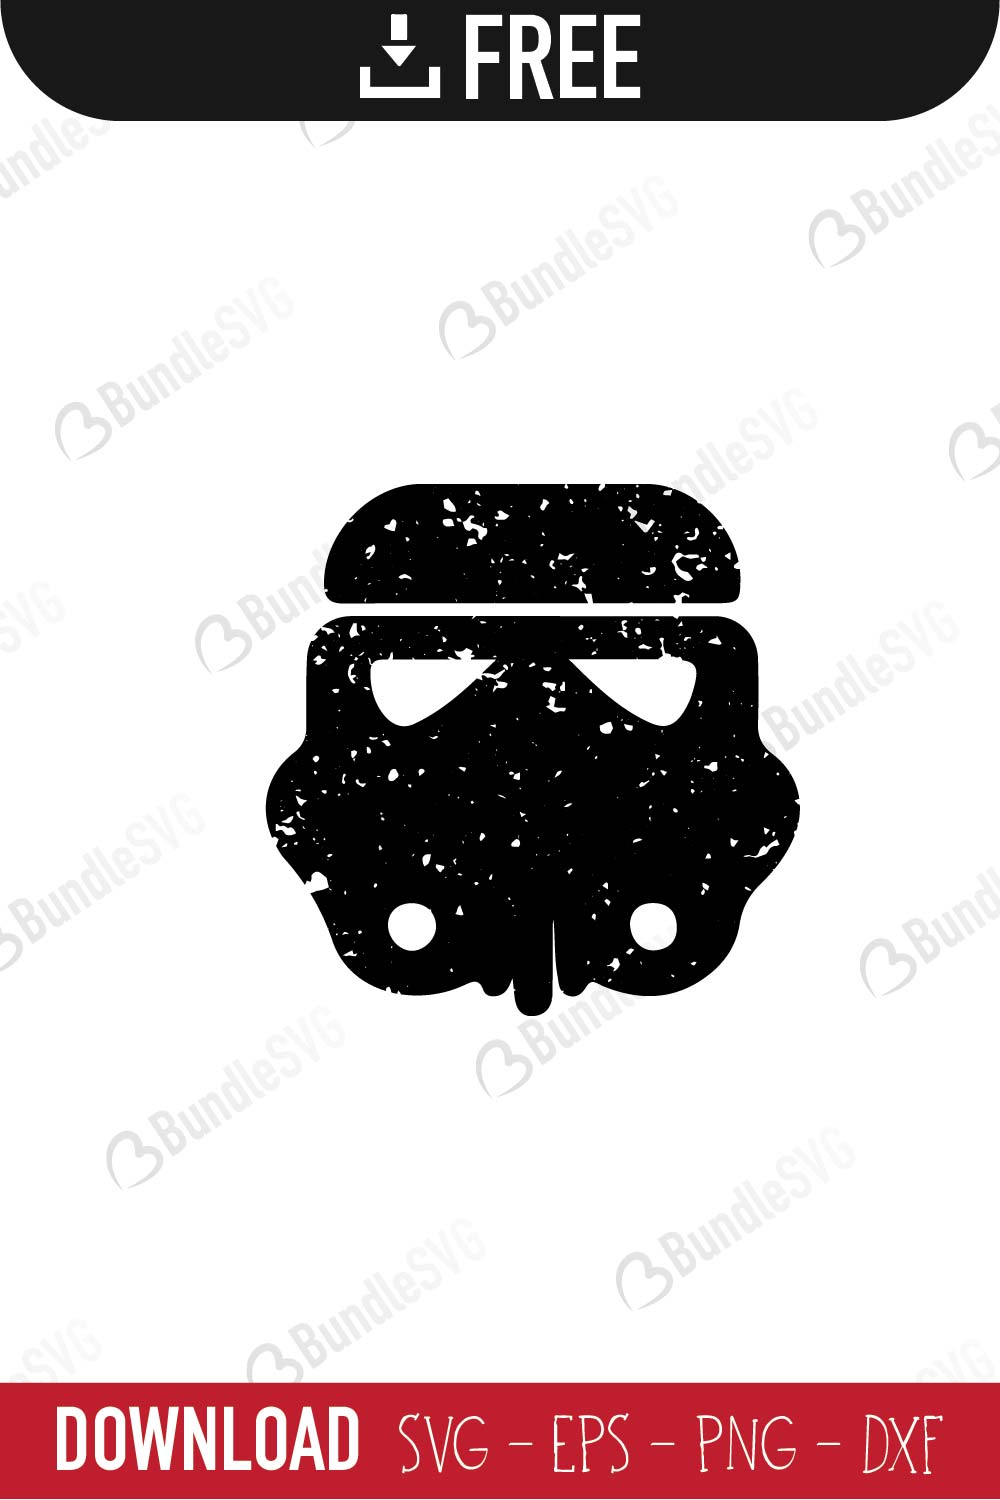 Star Wars SVG Cut Files Free Download | BundleSVG